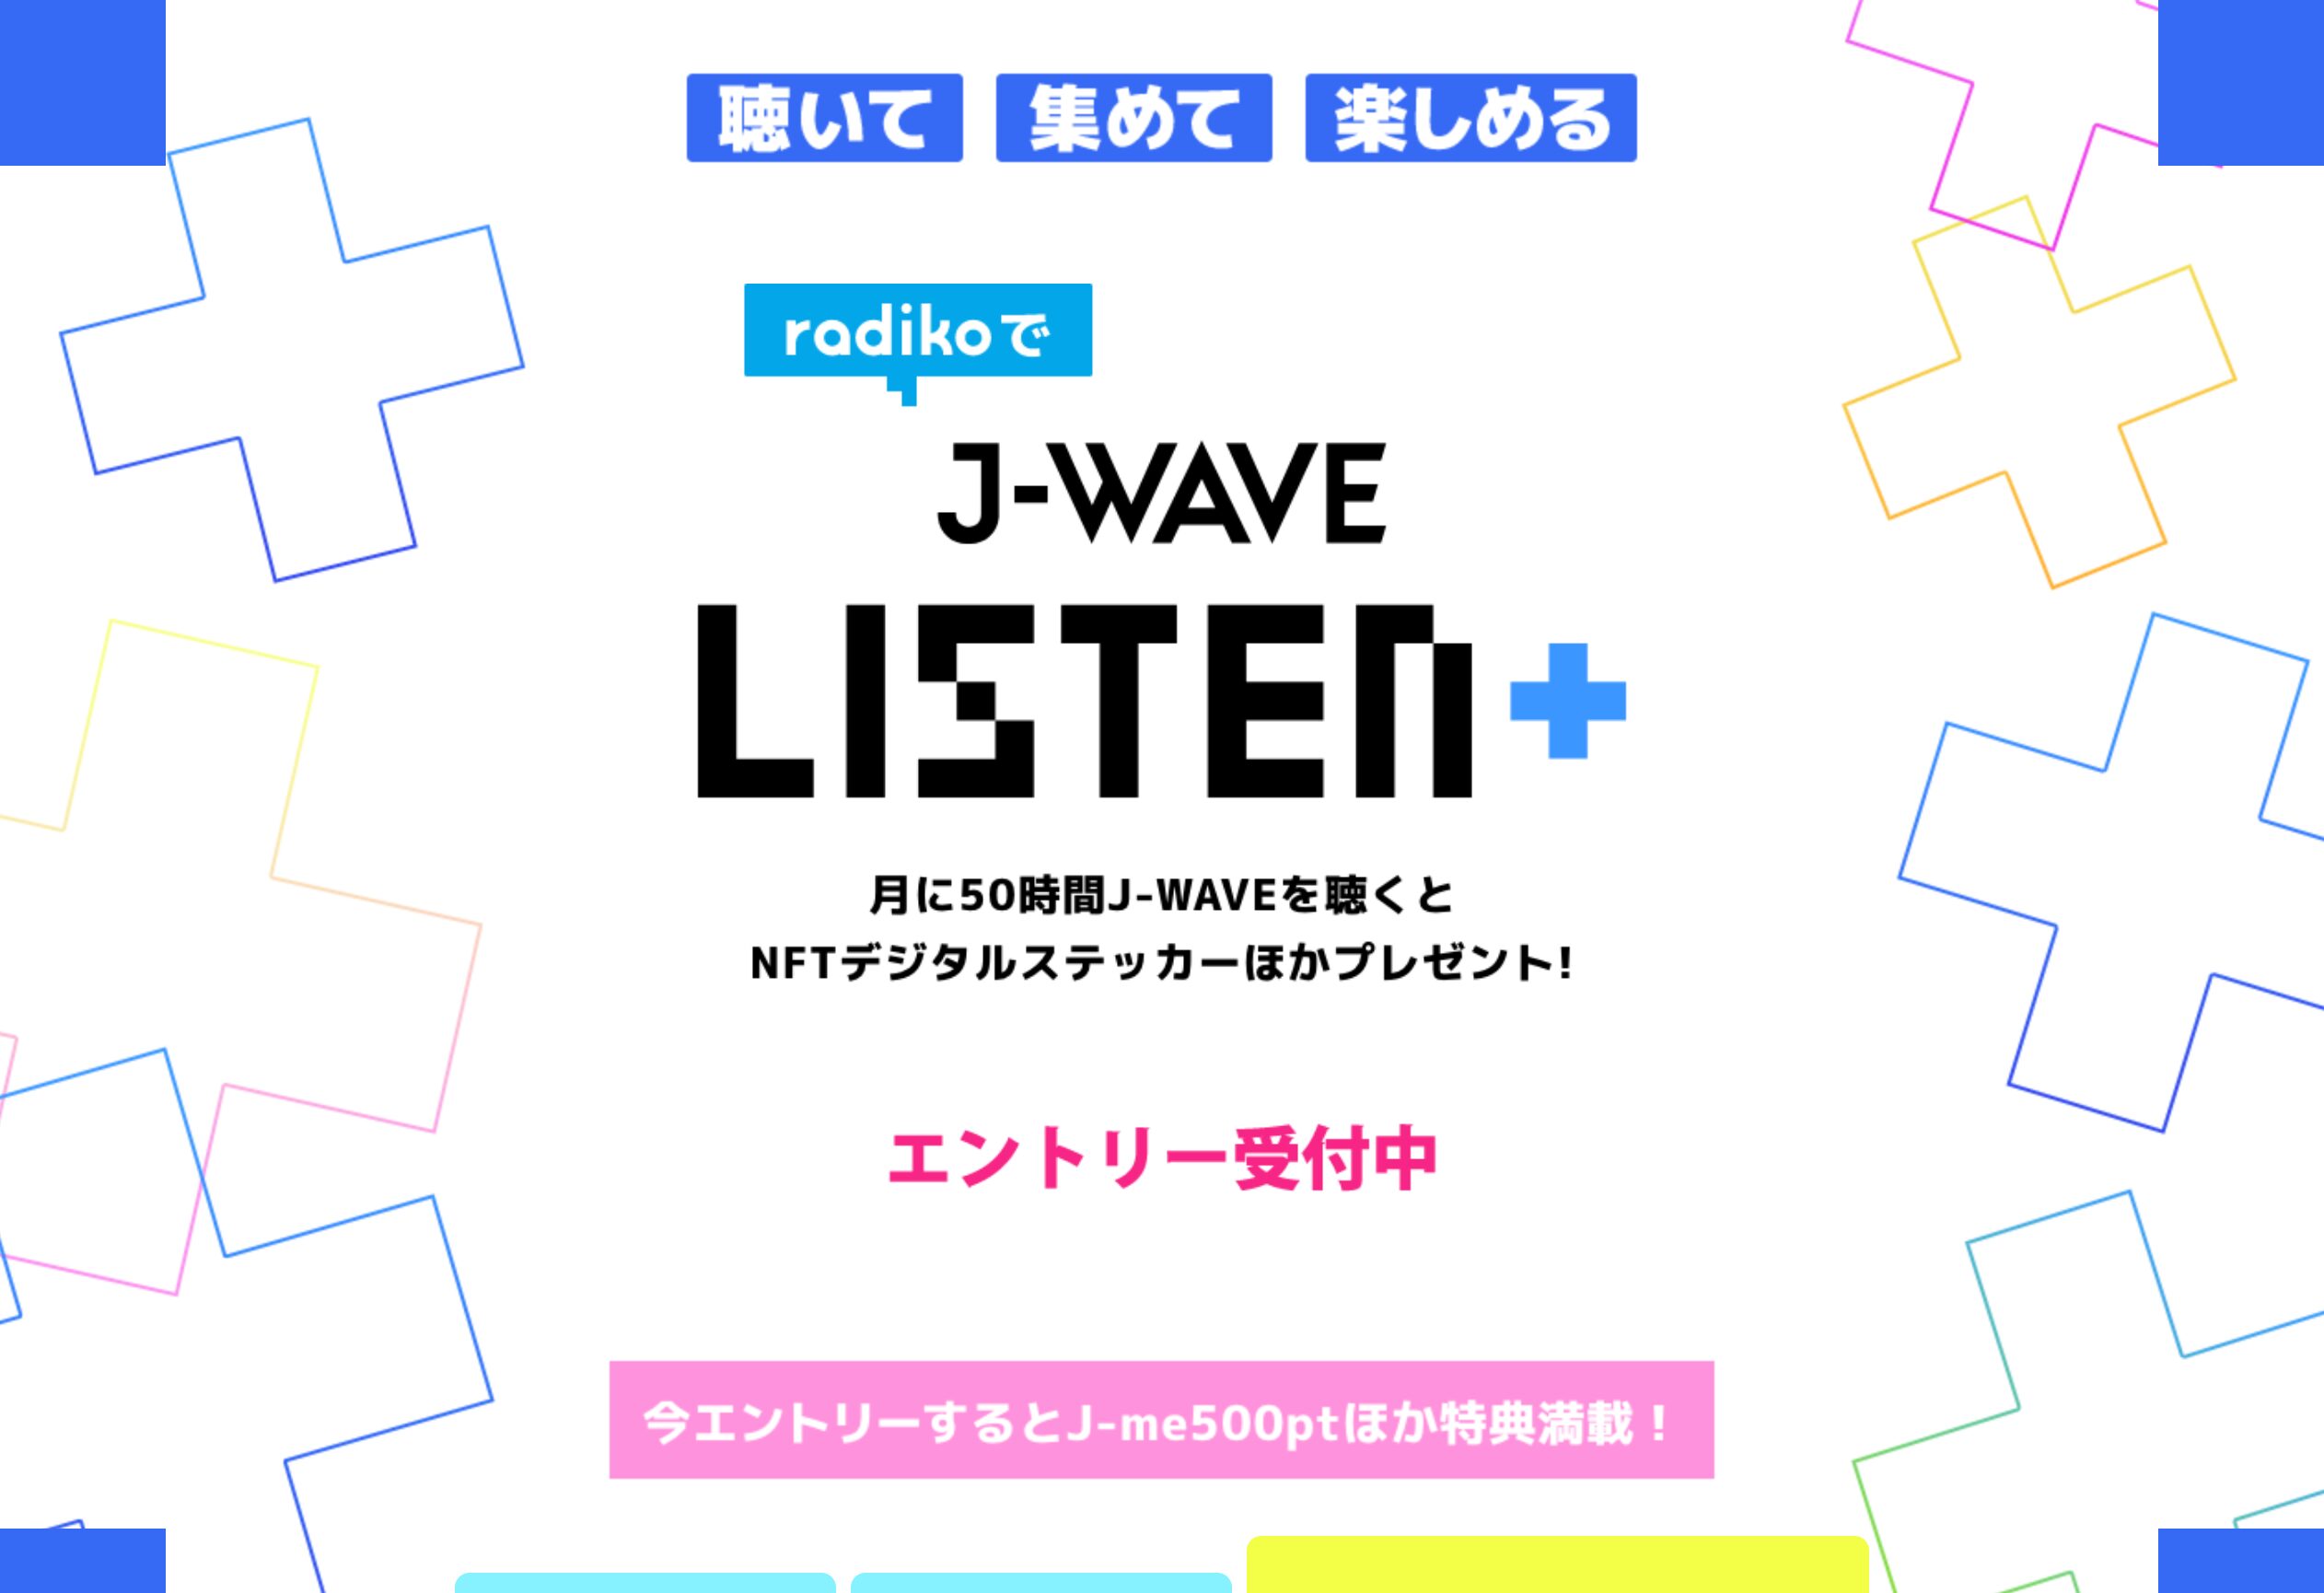 Web3.0で進化するラジオ聴取体験「J-WAVE LISTEN+」